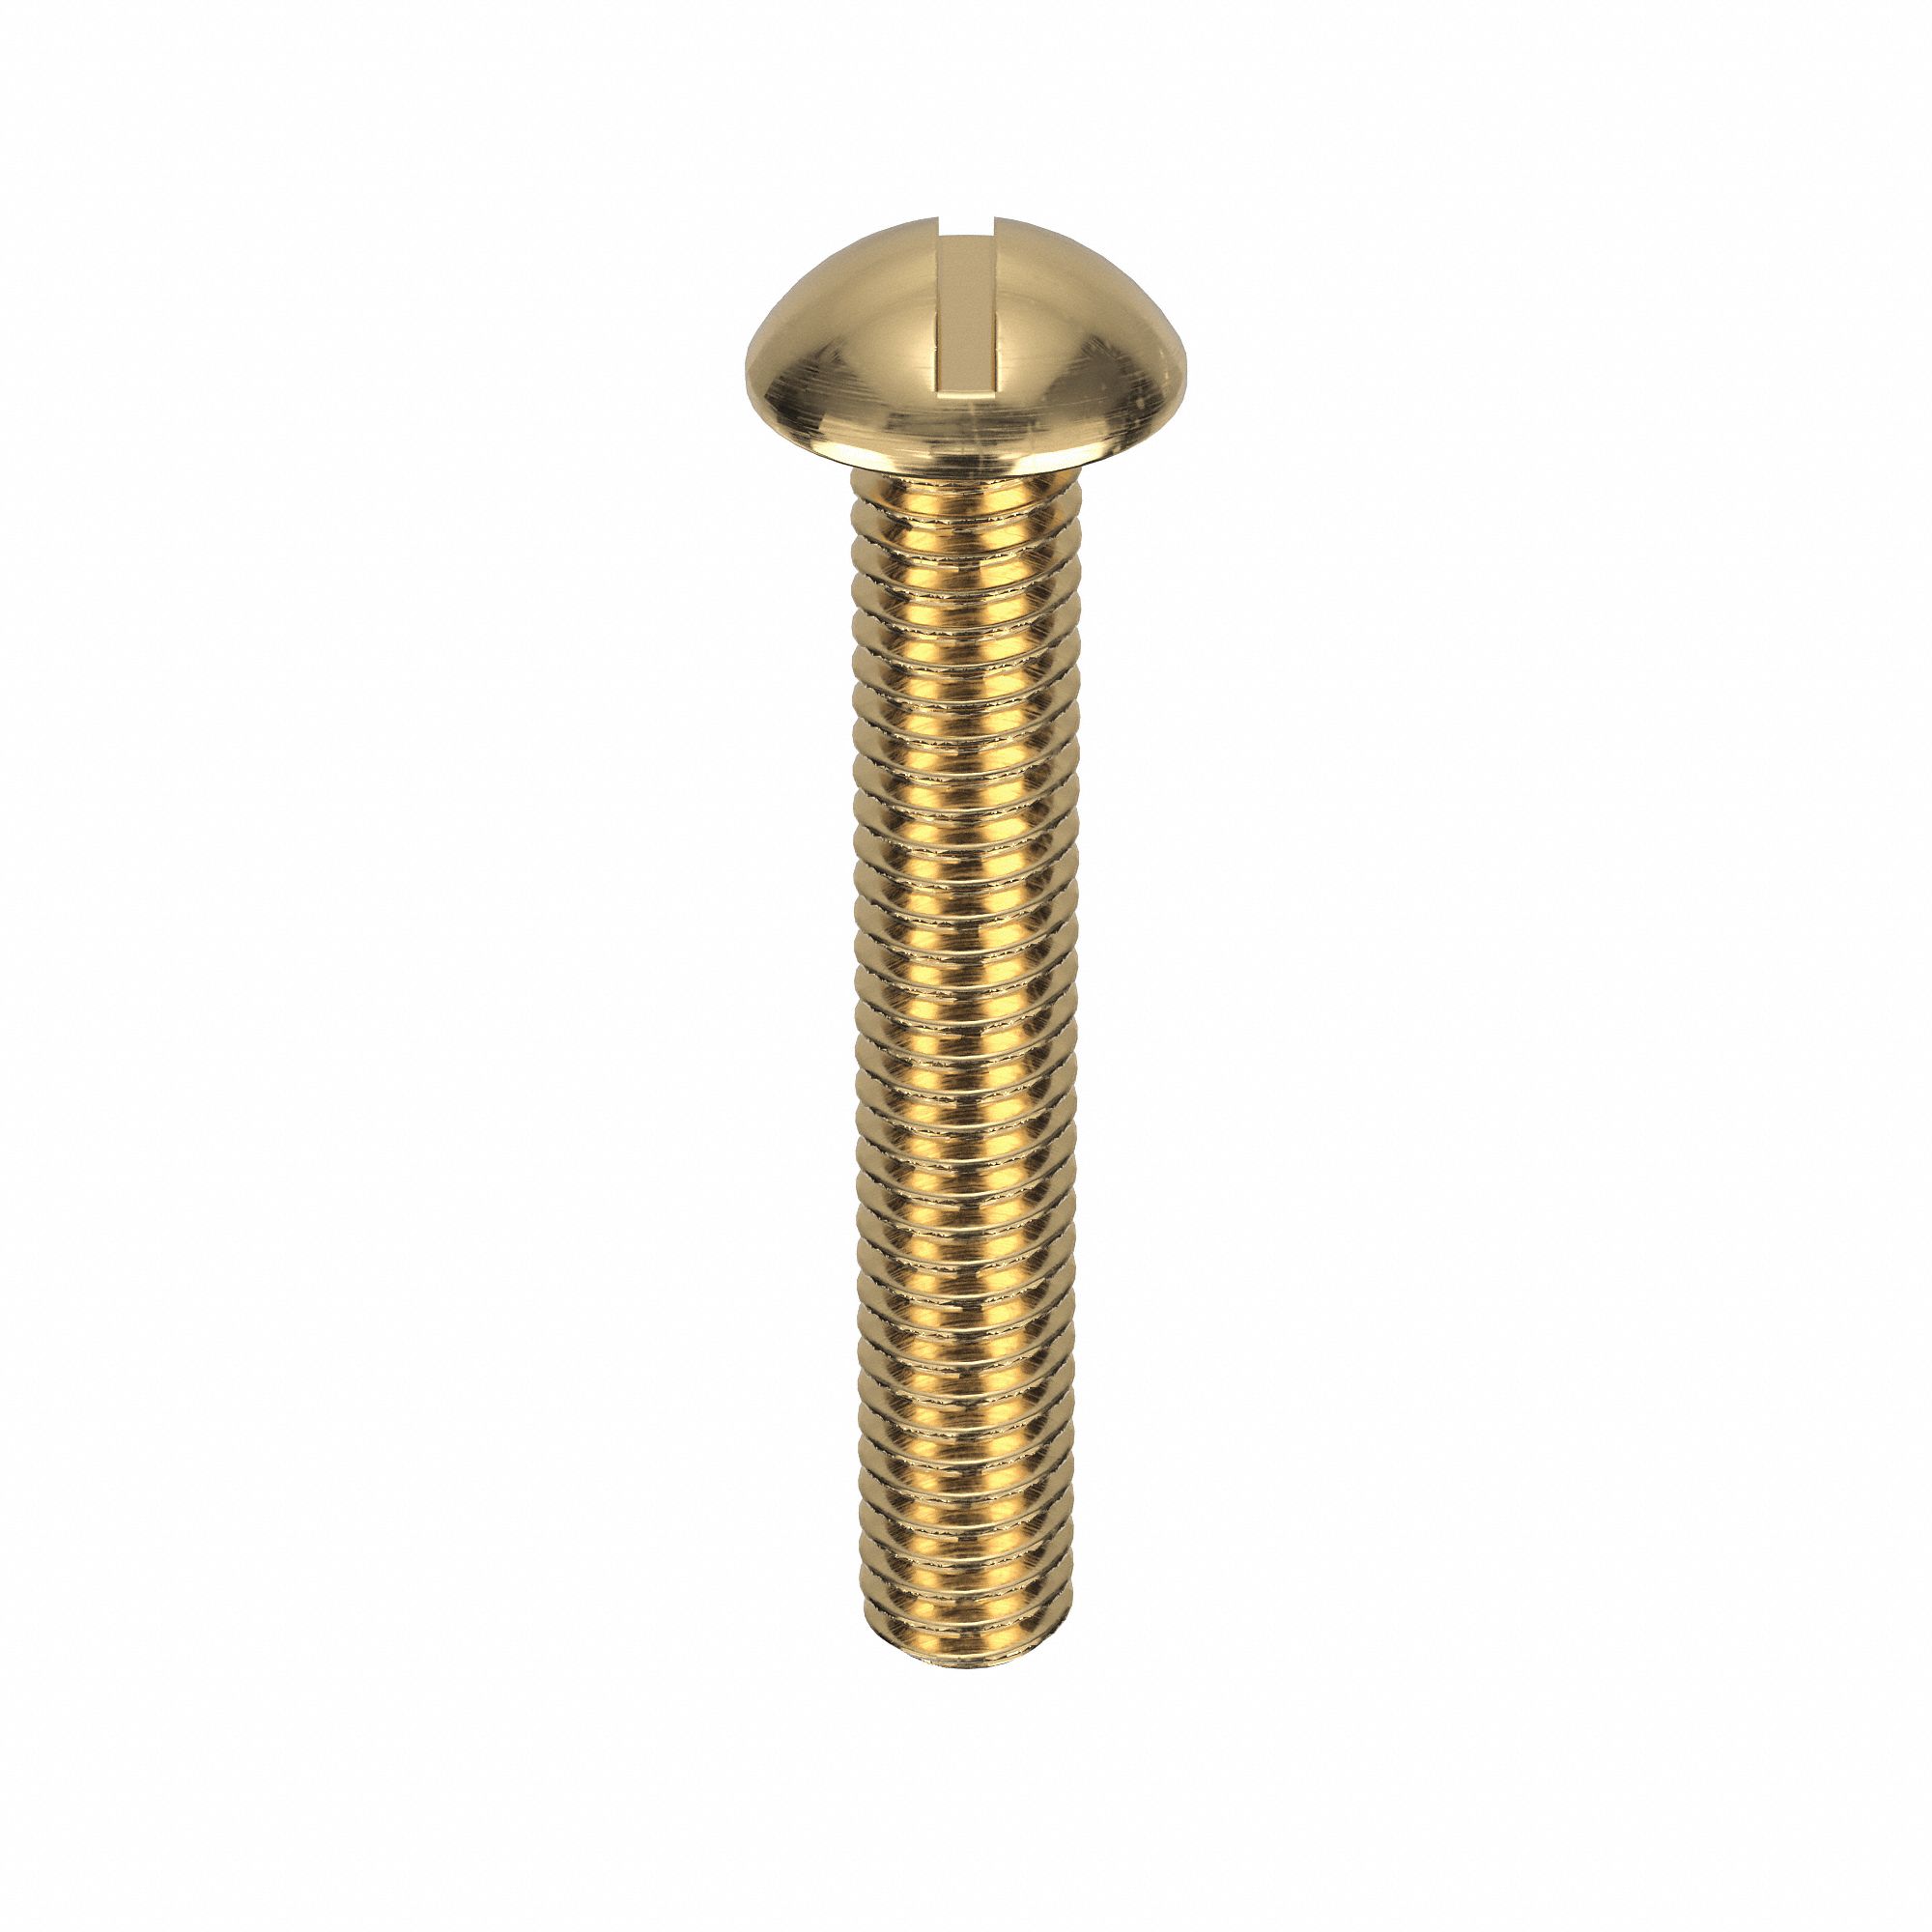 Machine Screw: 5/16-18 Thread Size, 2 in Lg, Brass, Plain, Round, Slotted,  ASME B18.6.3, 25 PK